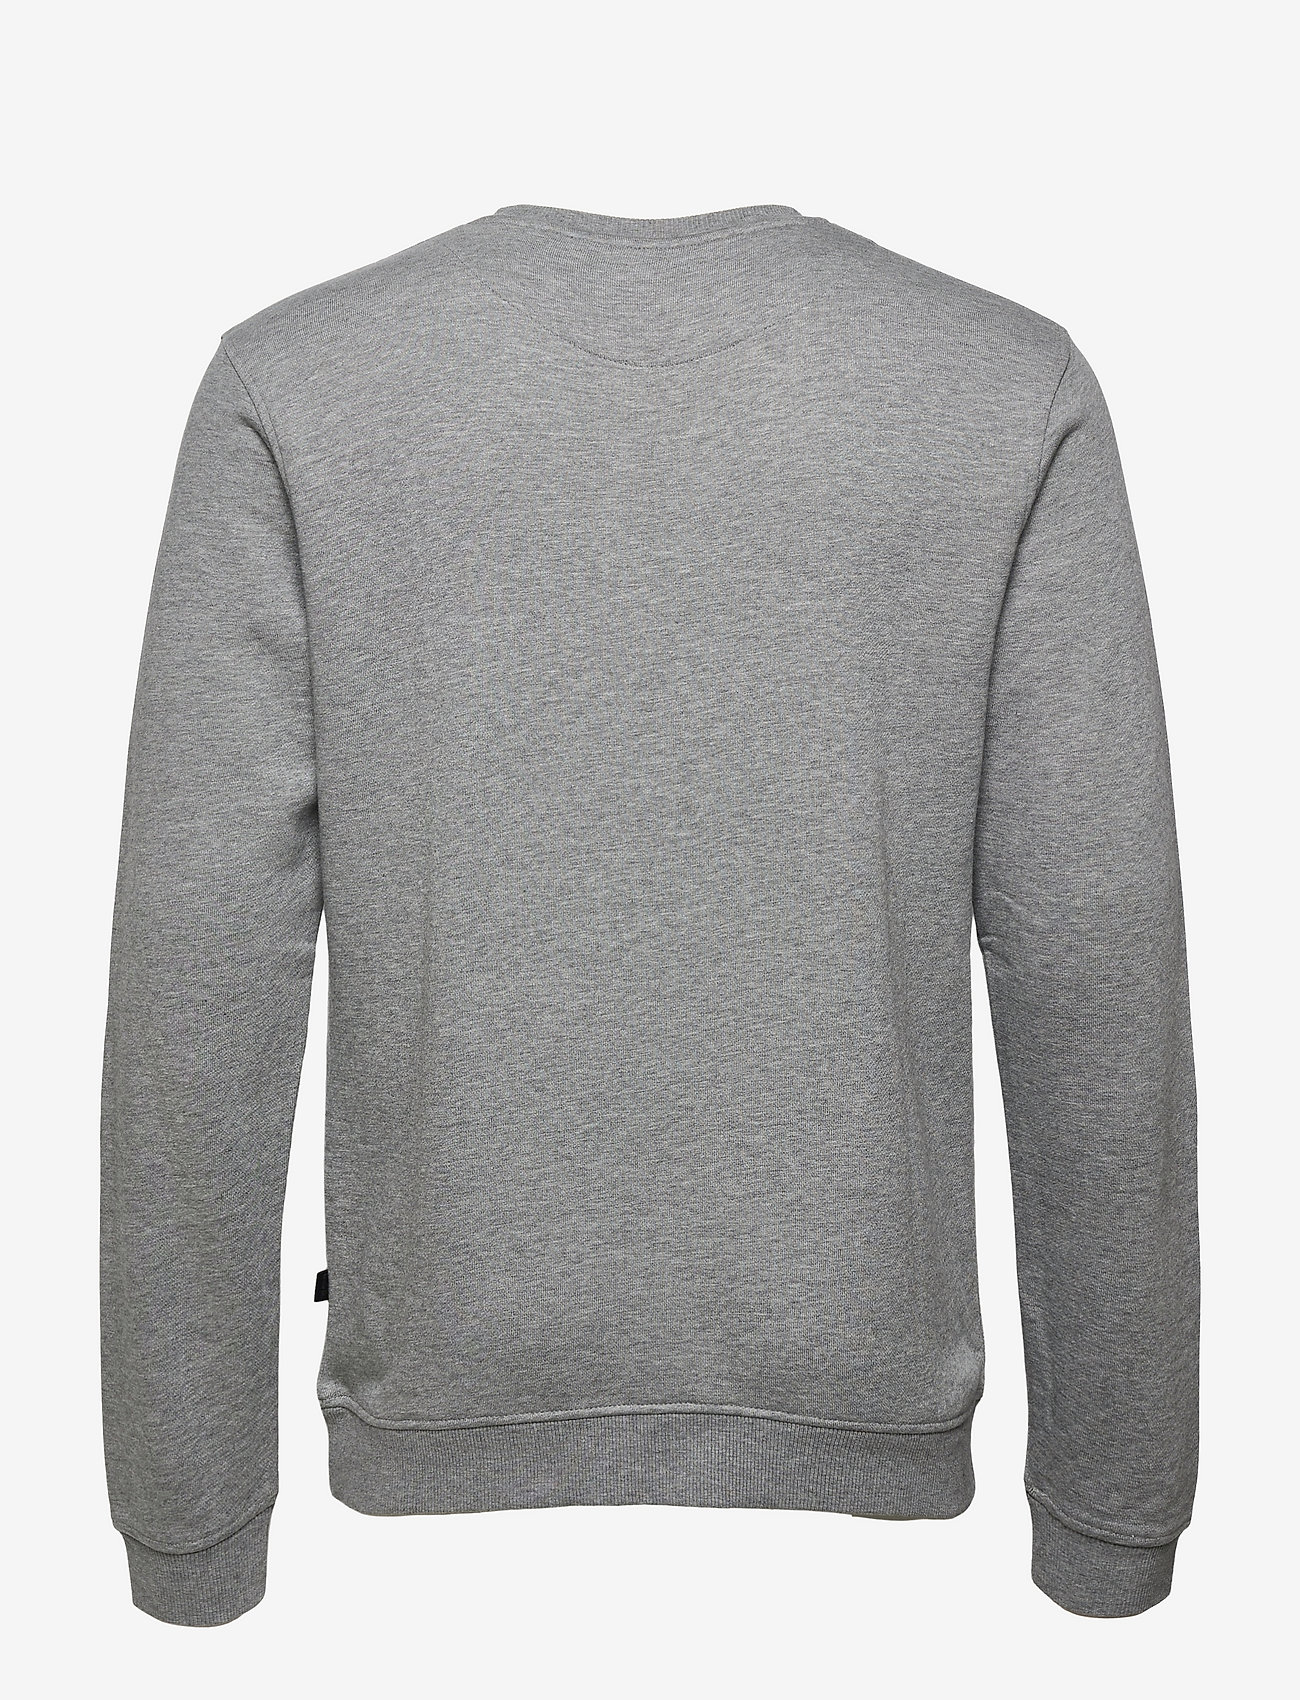 Resteröds - BAMBOO sweatshirt FSC - svetarit - grå - 1